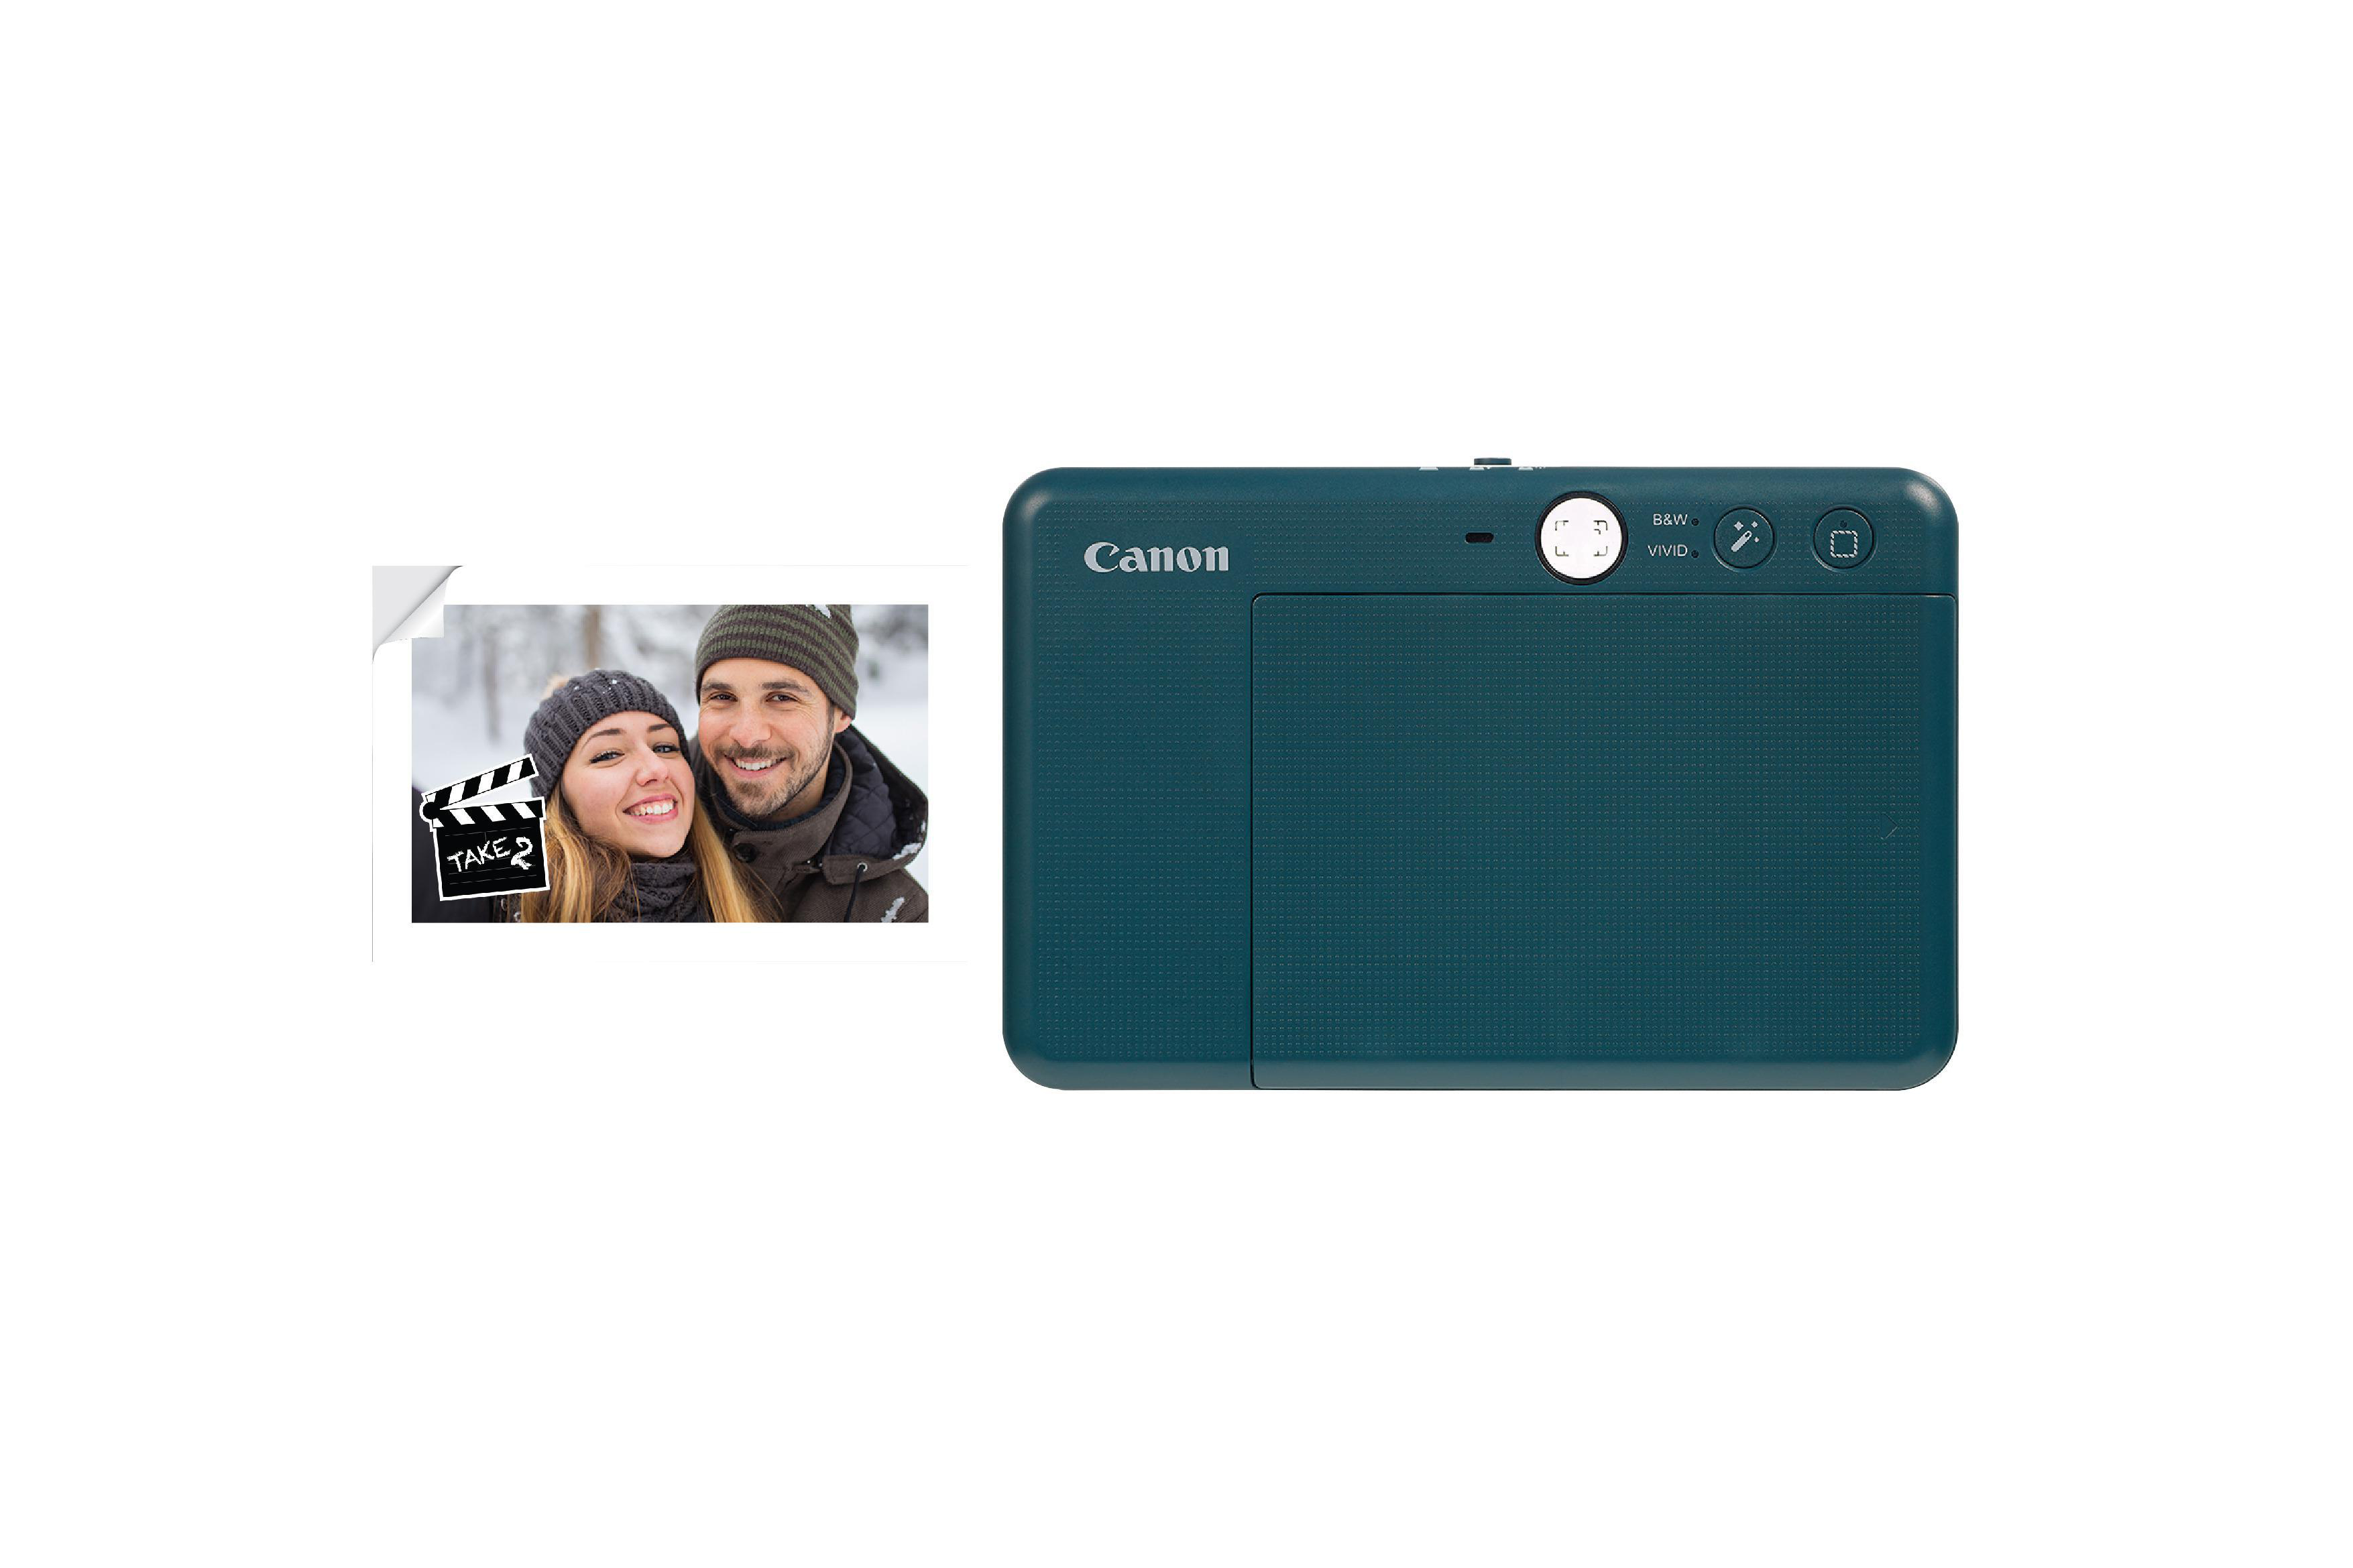 Fotodrucker, CANON S2 Zoemini Aquamarin und Sofortbildkamera